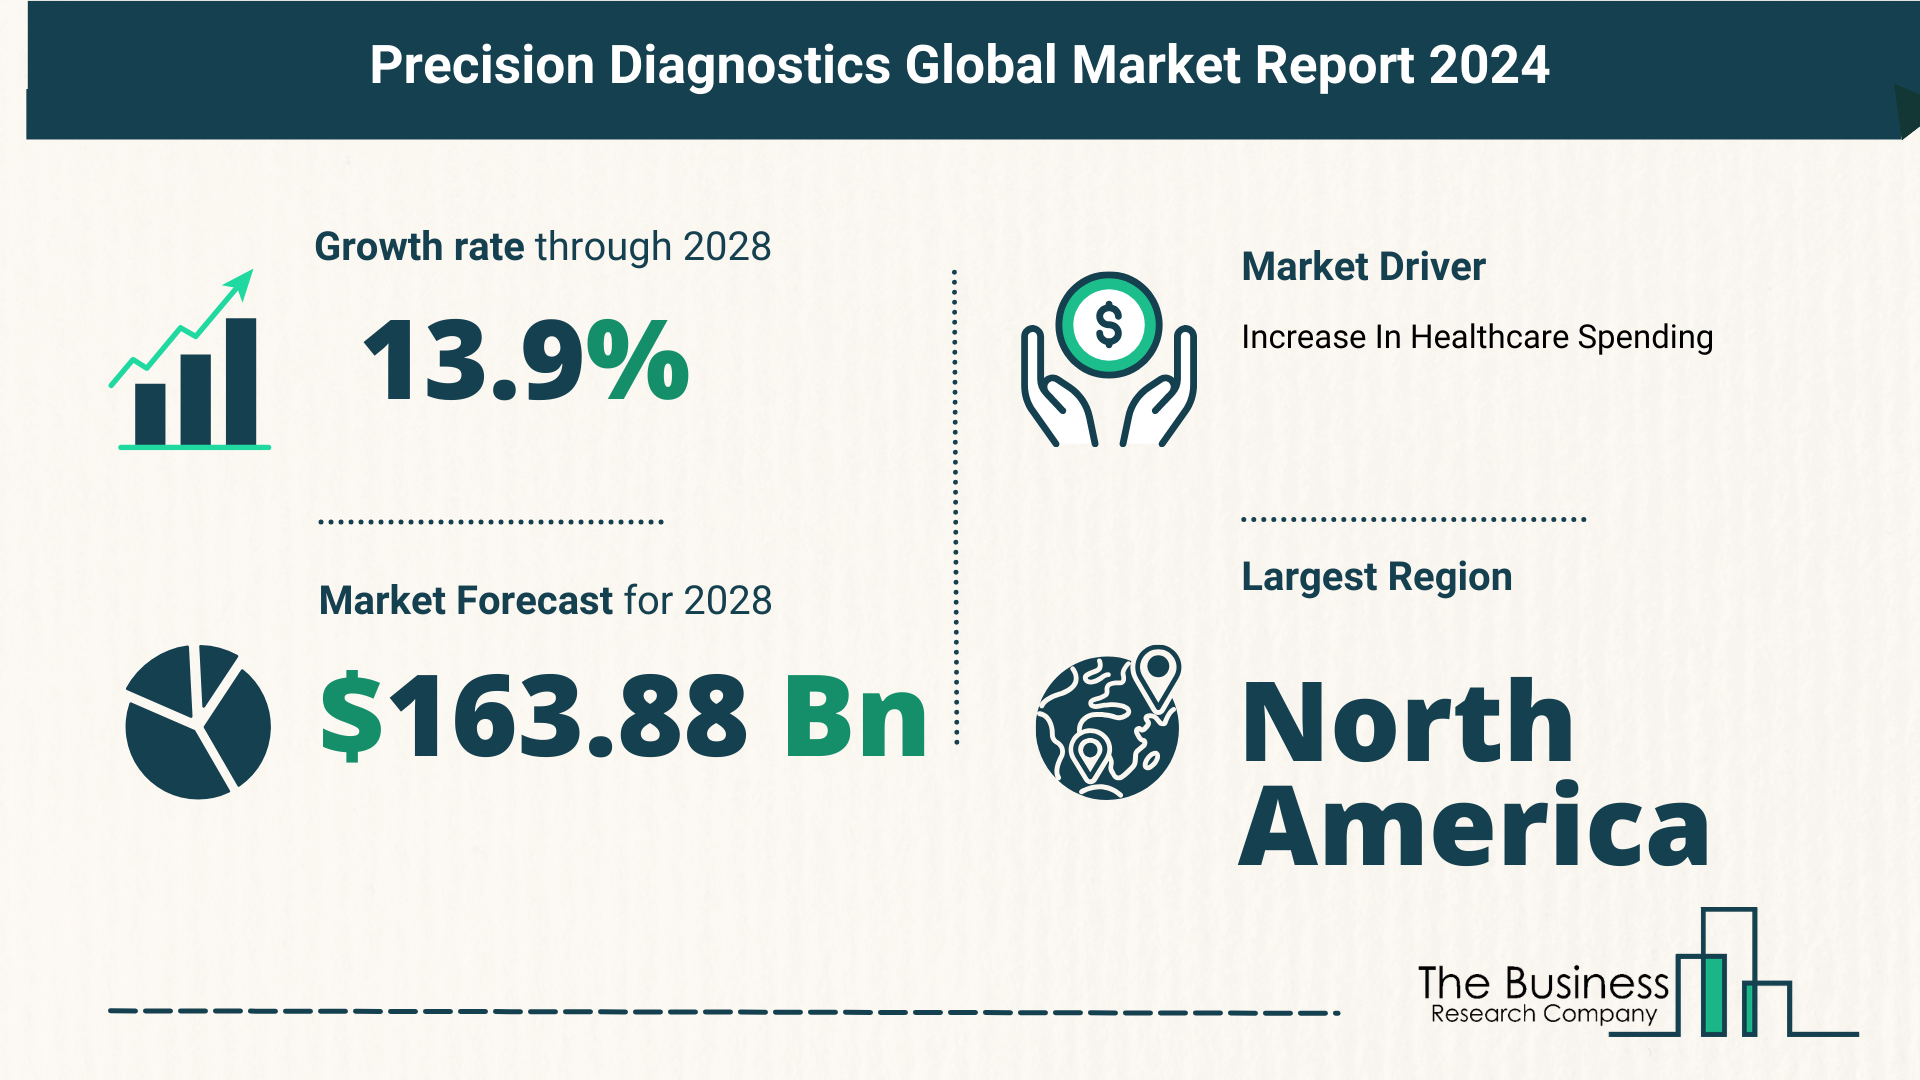 Top 5 Insights From The Precision Diagnostics Market Report 2024